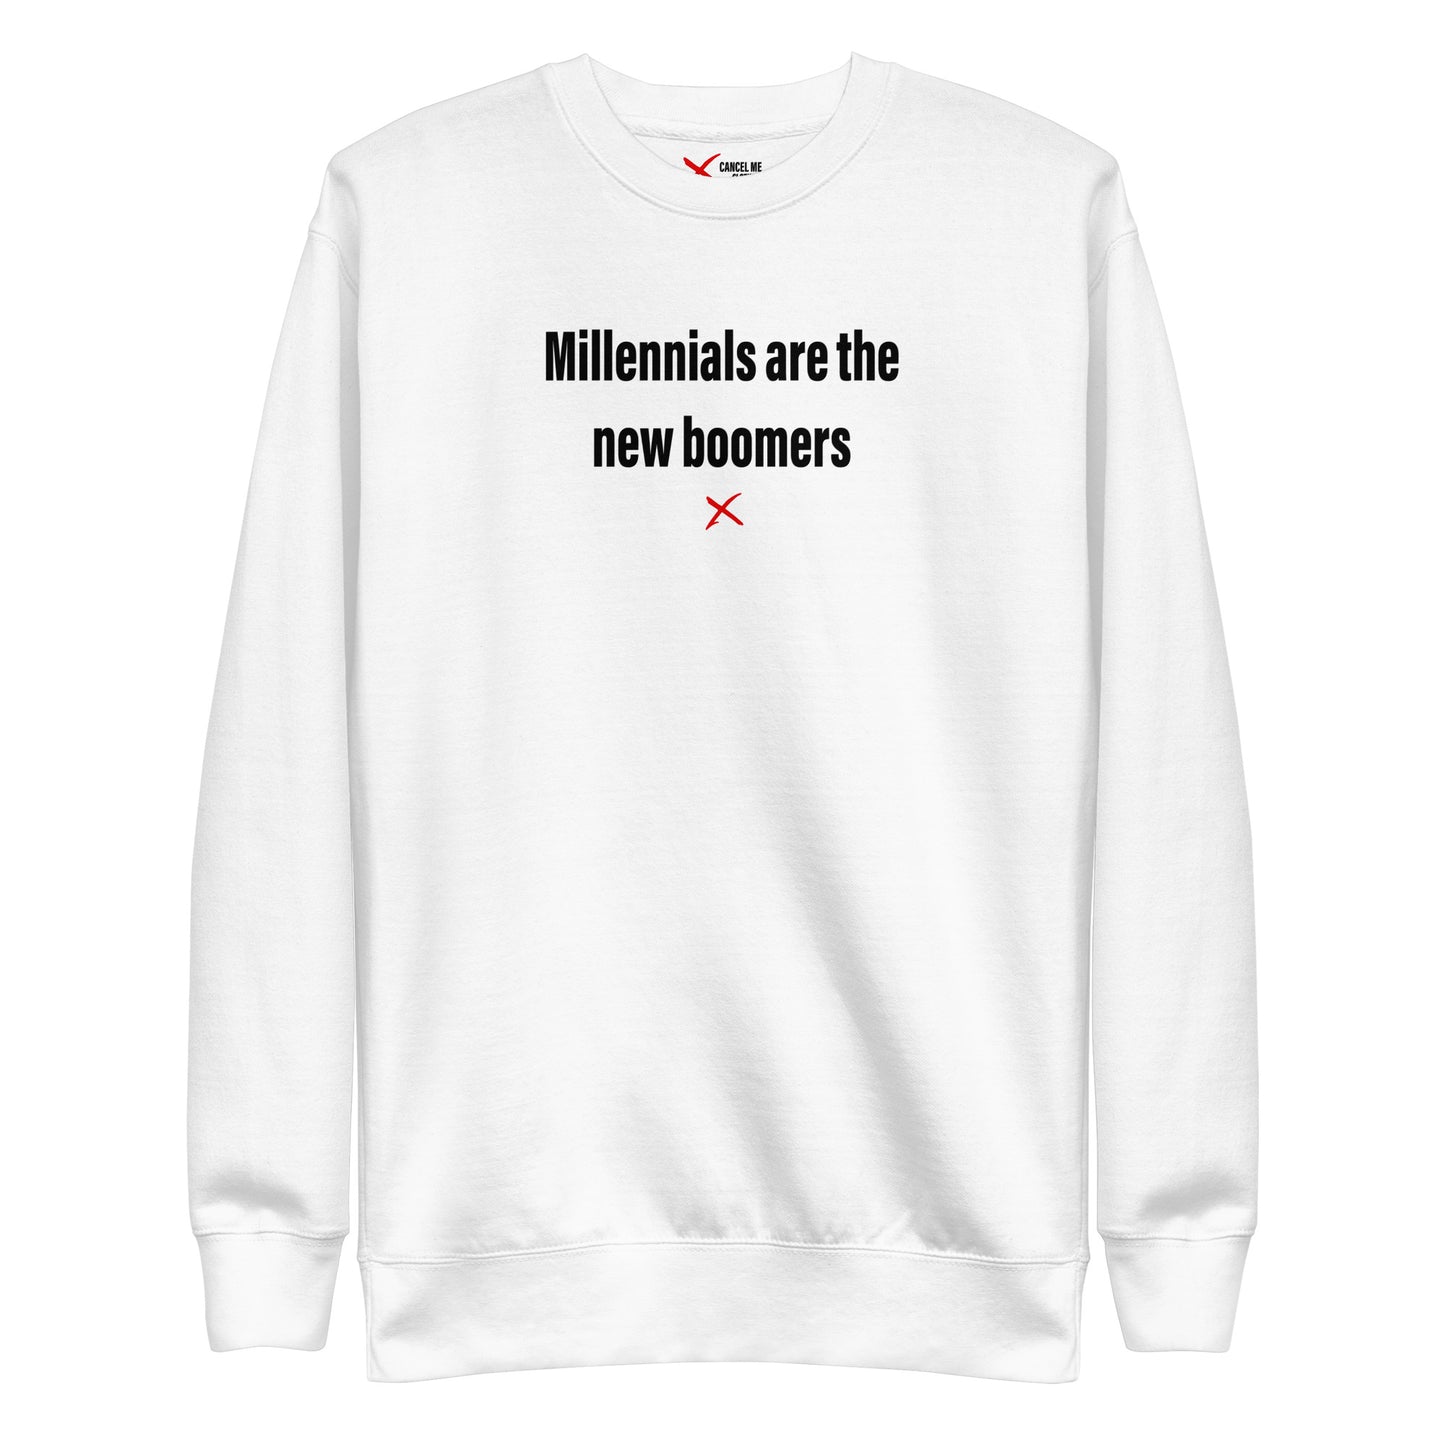 Millennials are the new boomers - Sweatshirt